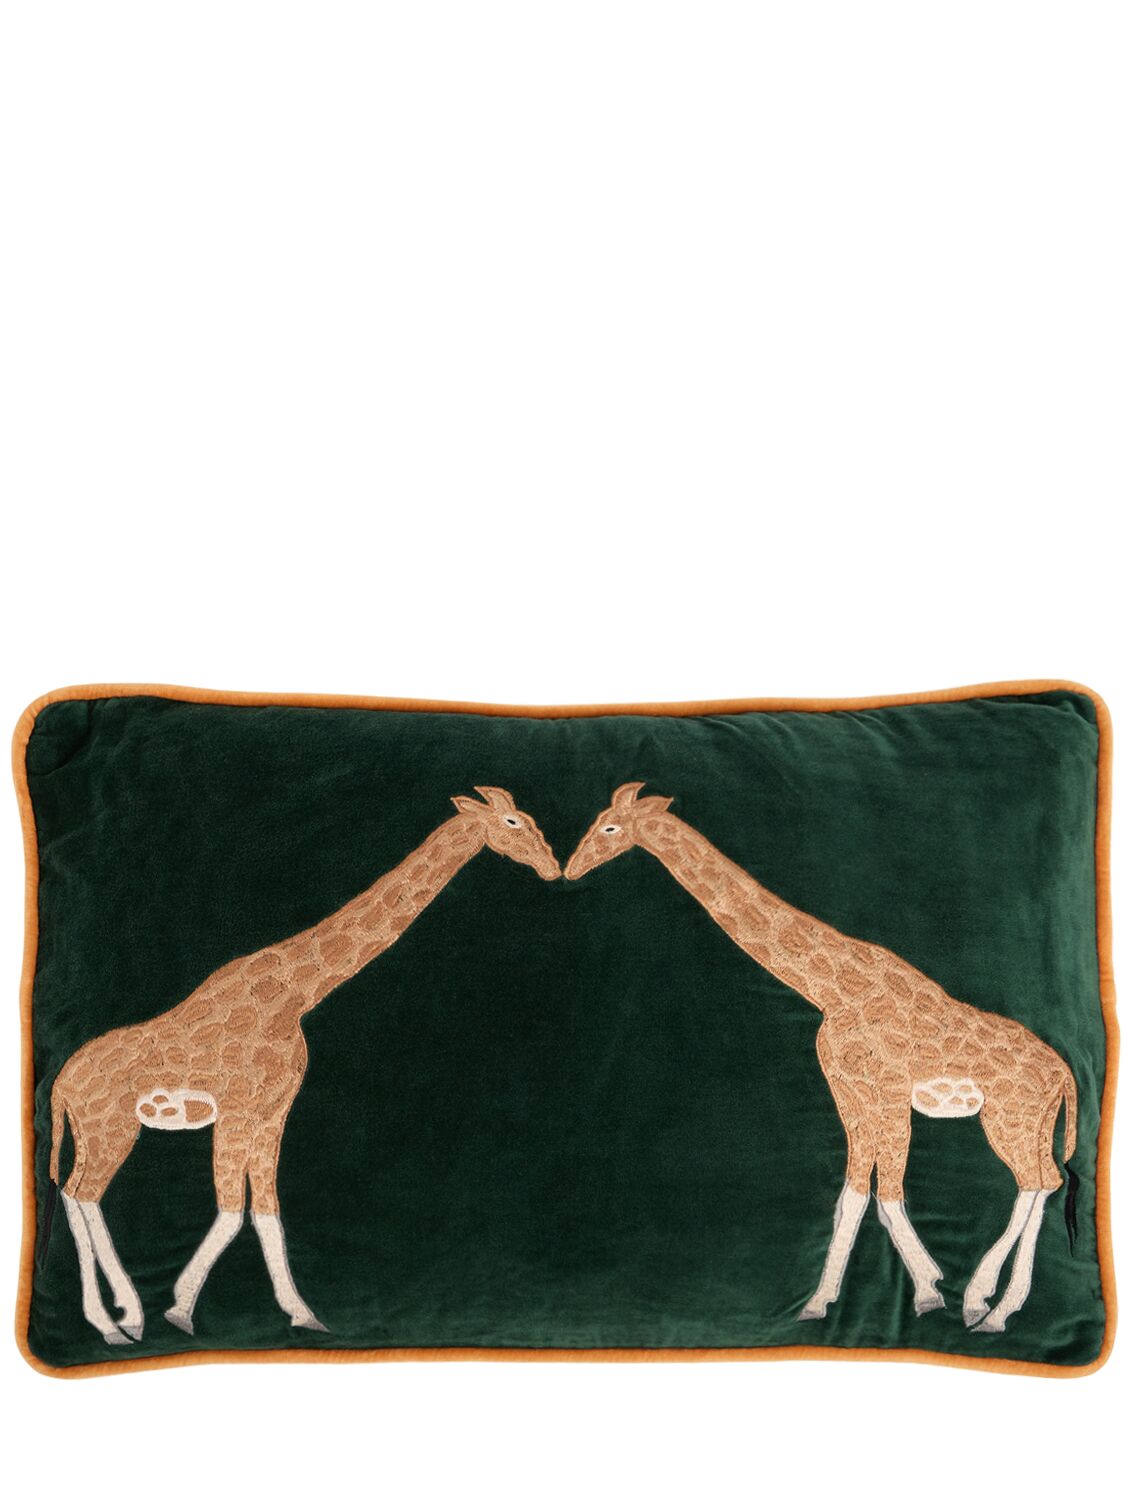 Les Ottomans Embroidered Velvet Cushion In Green